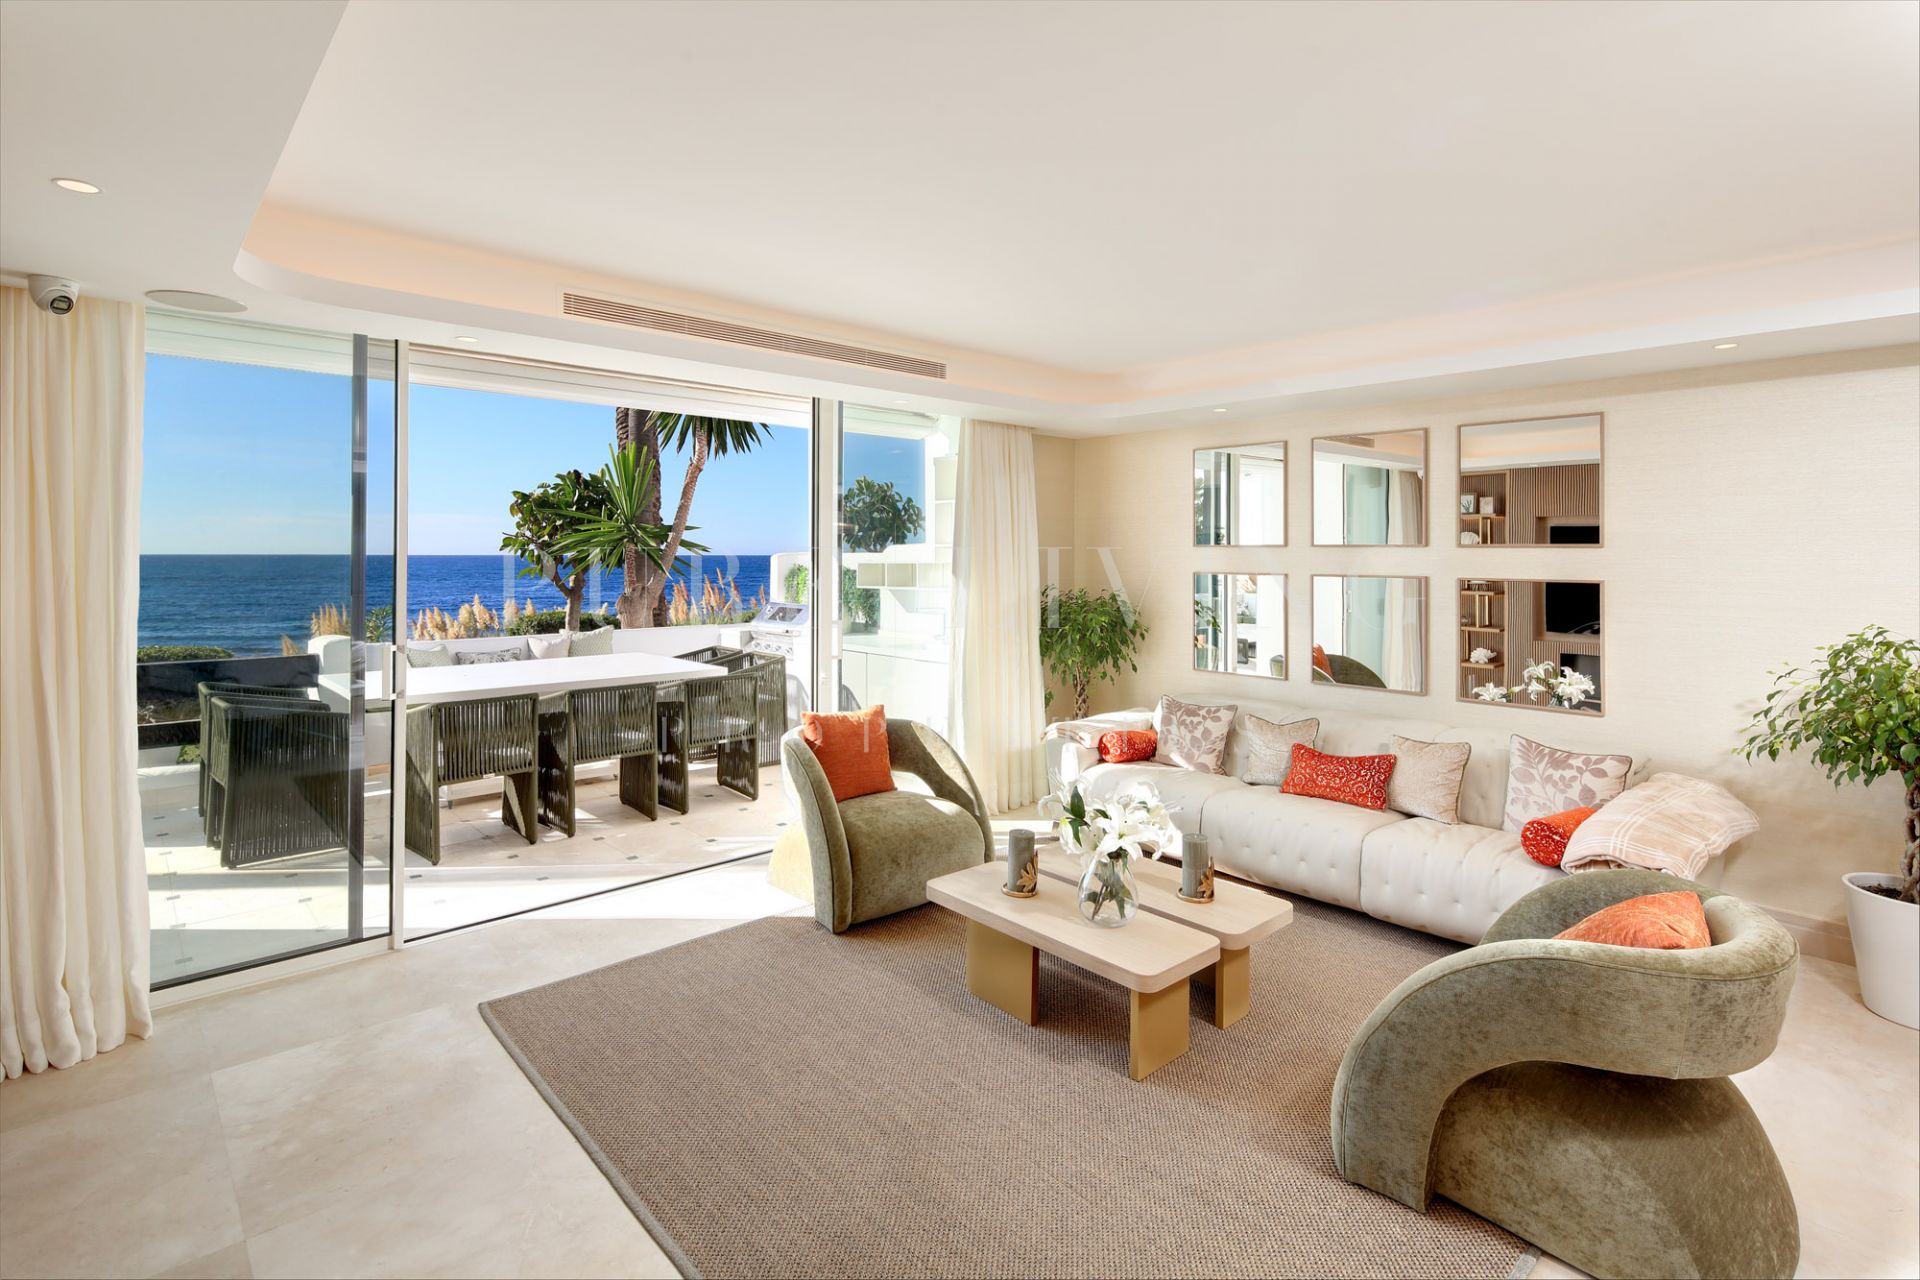 An exquisite ground floor frontline beach apartment in Puente Romano Beach Resort